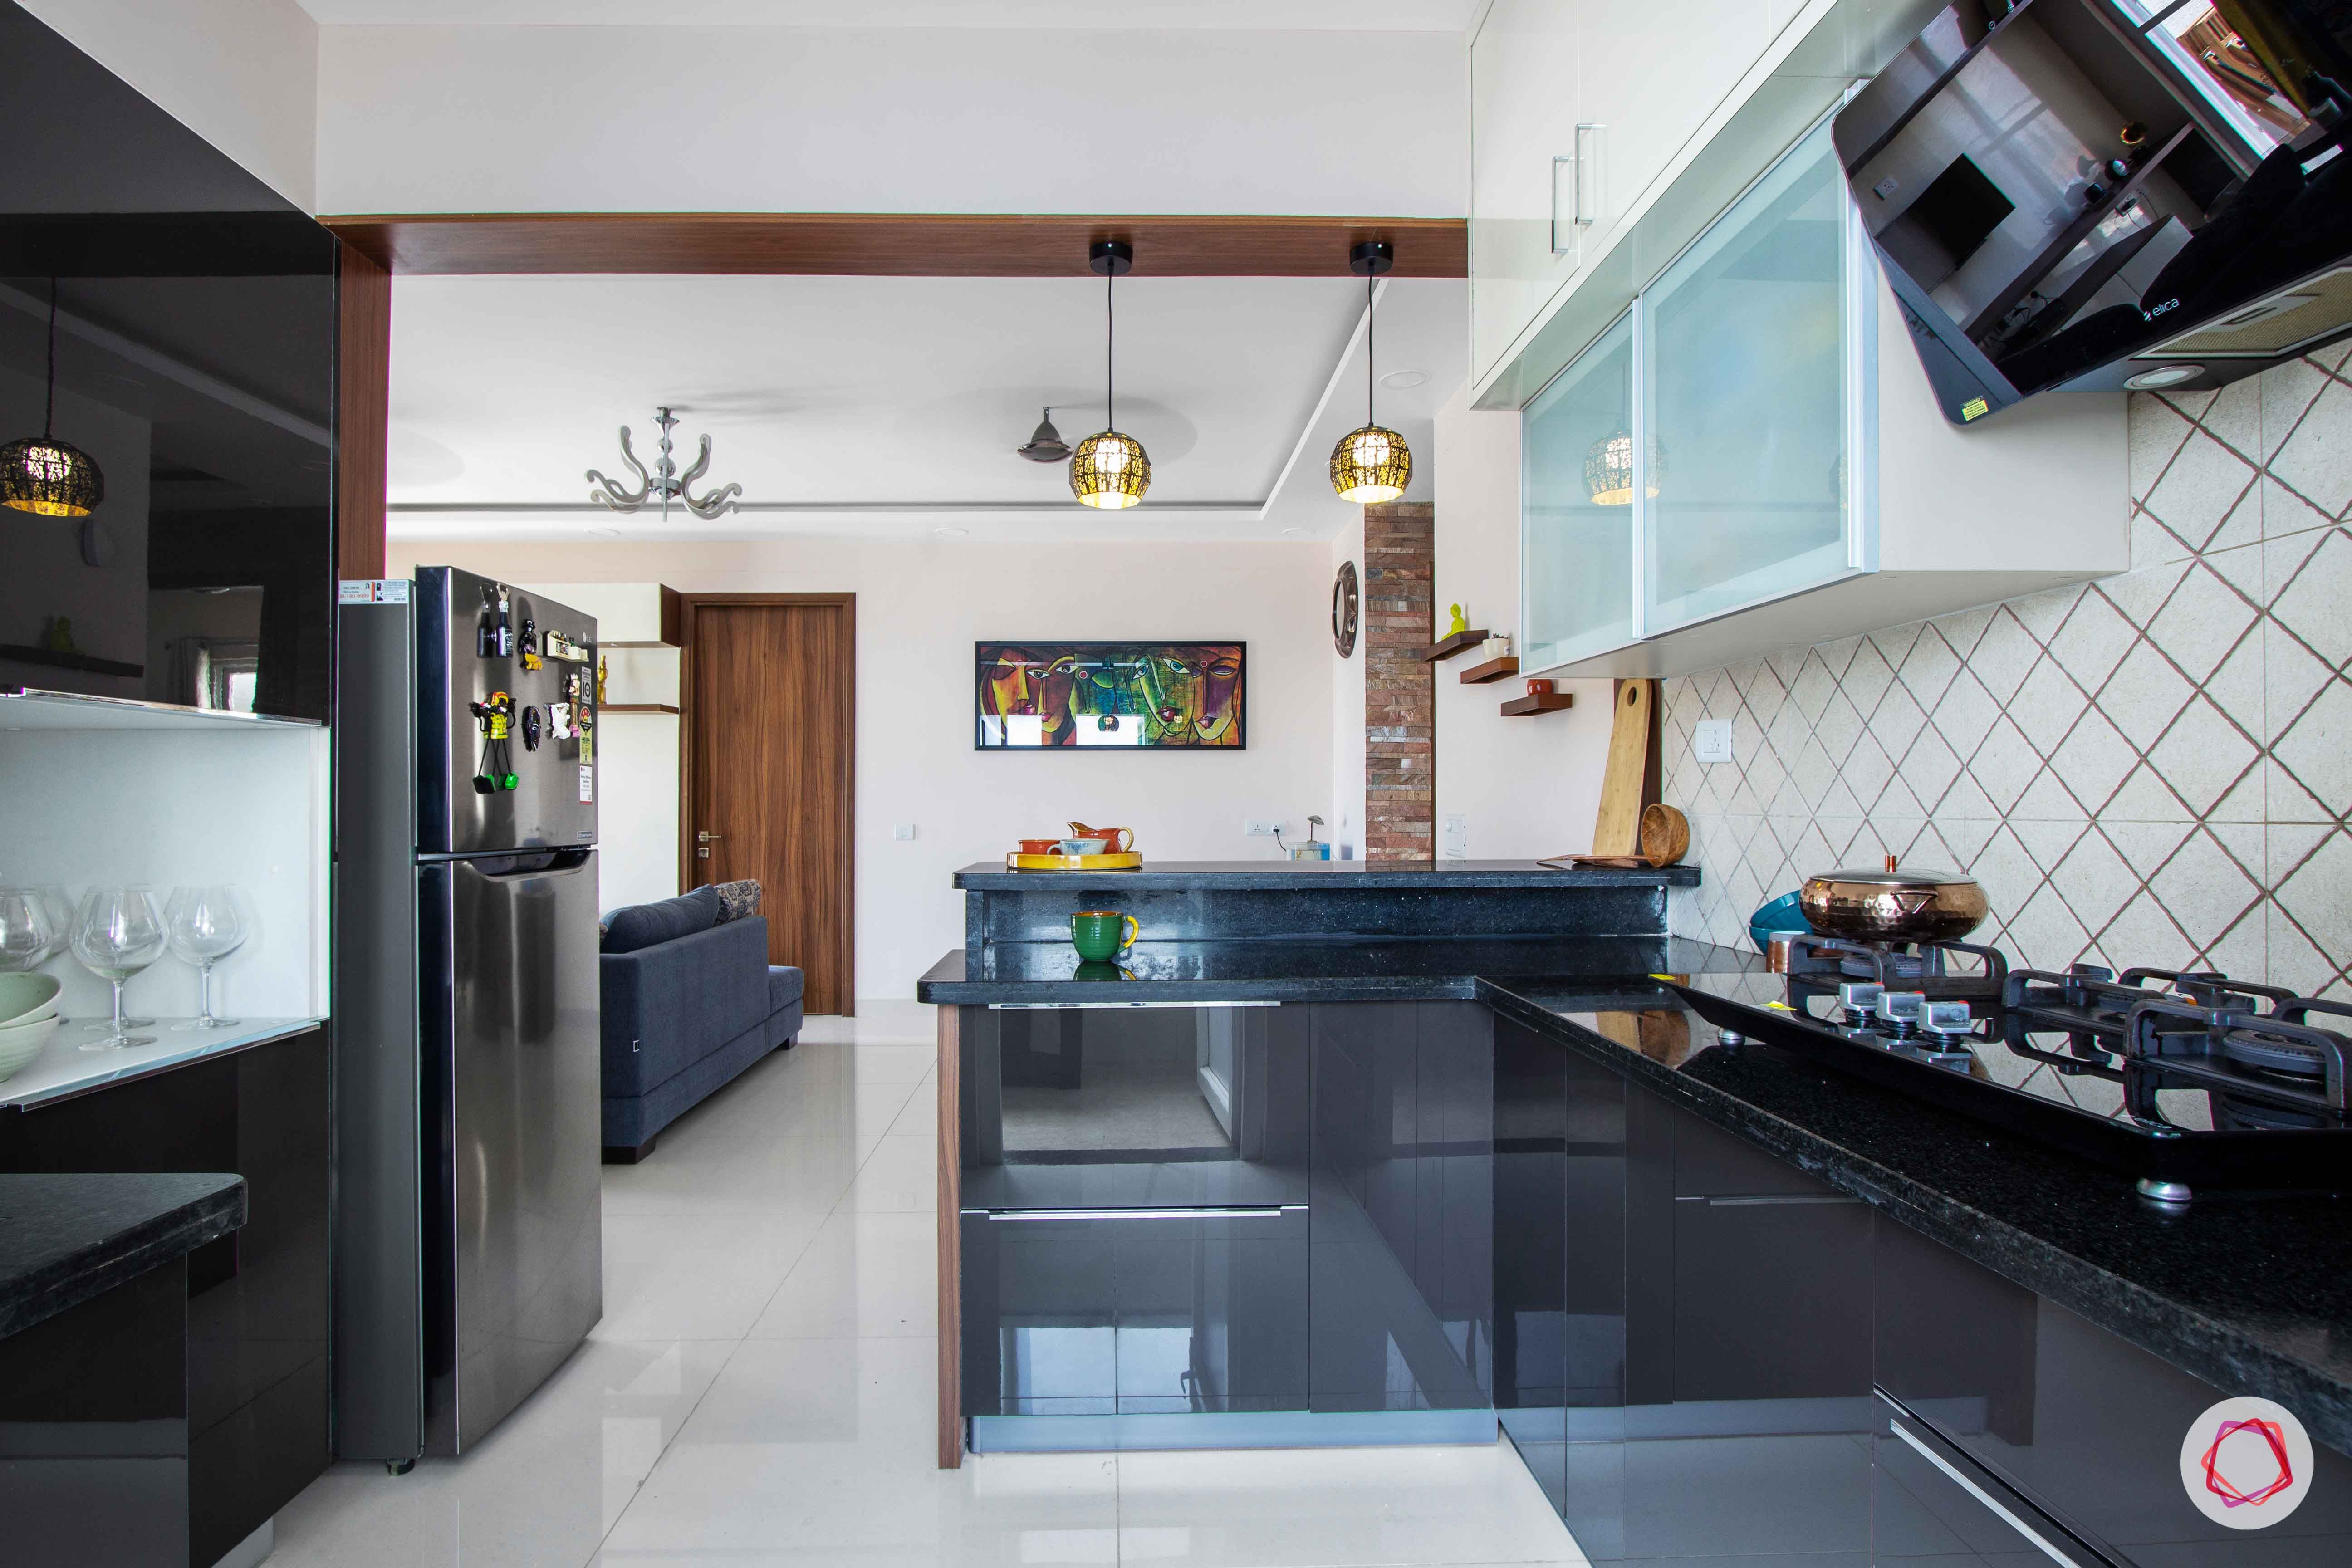 snn raj greenbay-modular kitchen-grey kitchen-full kitchen design